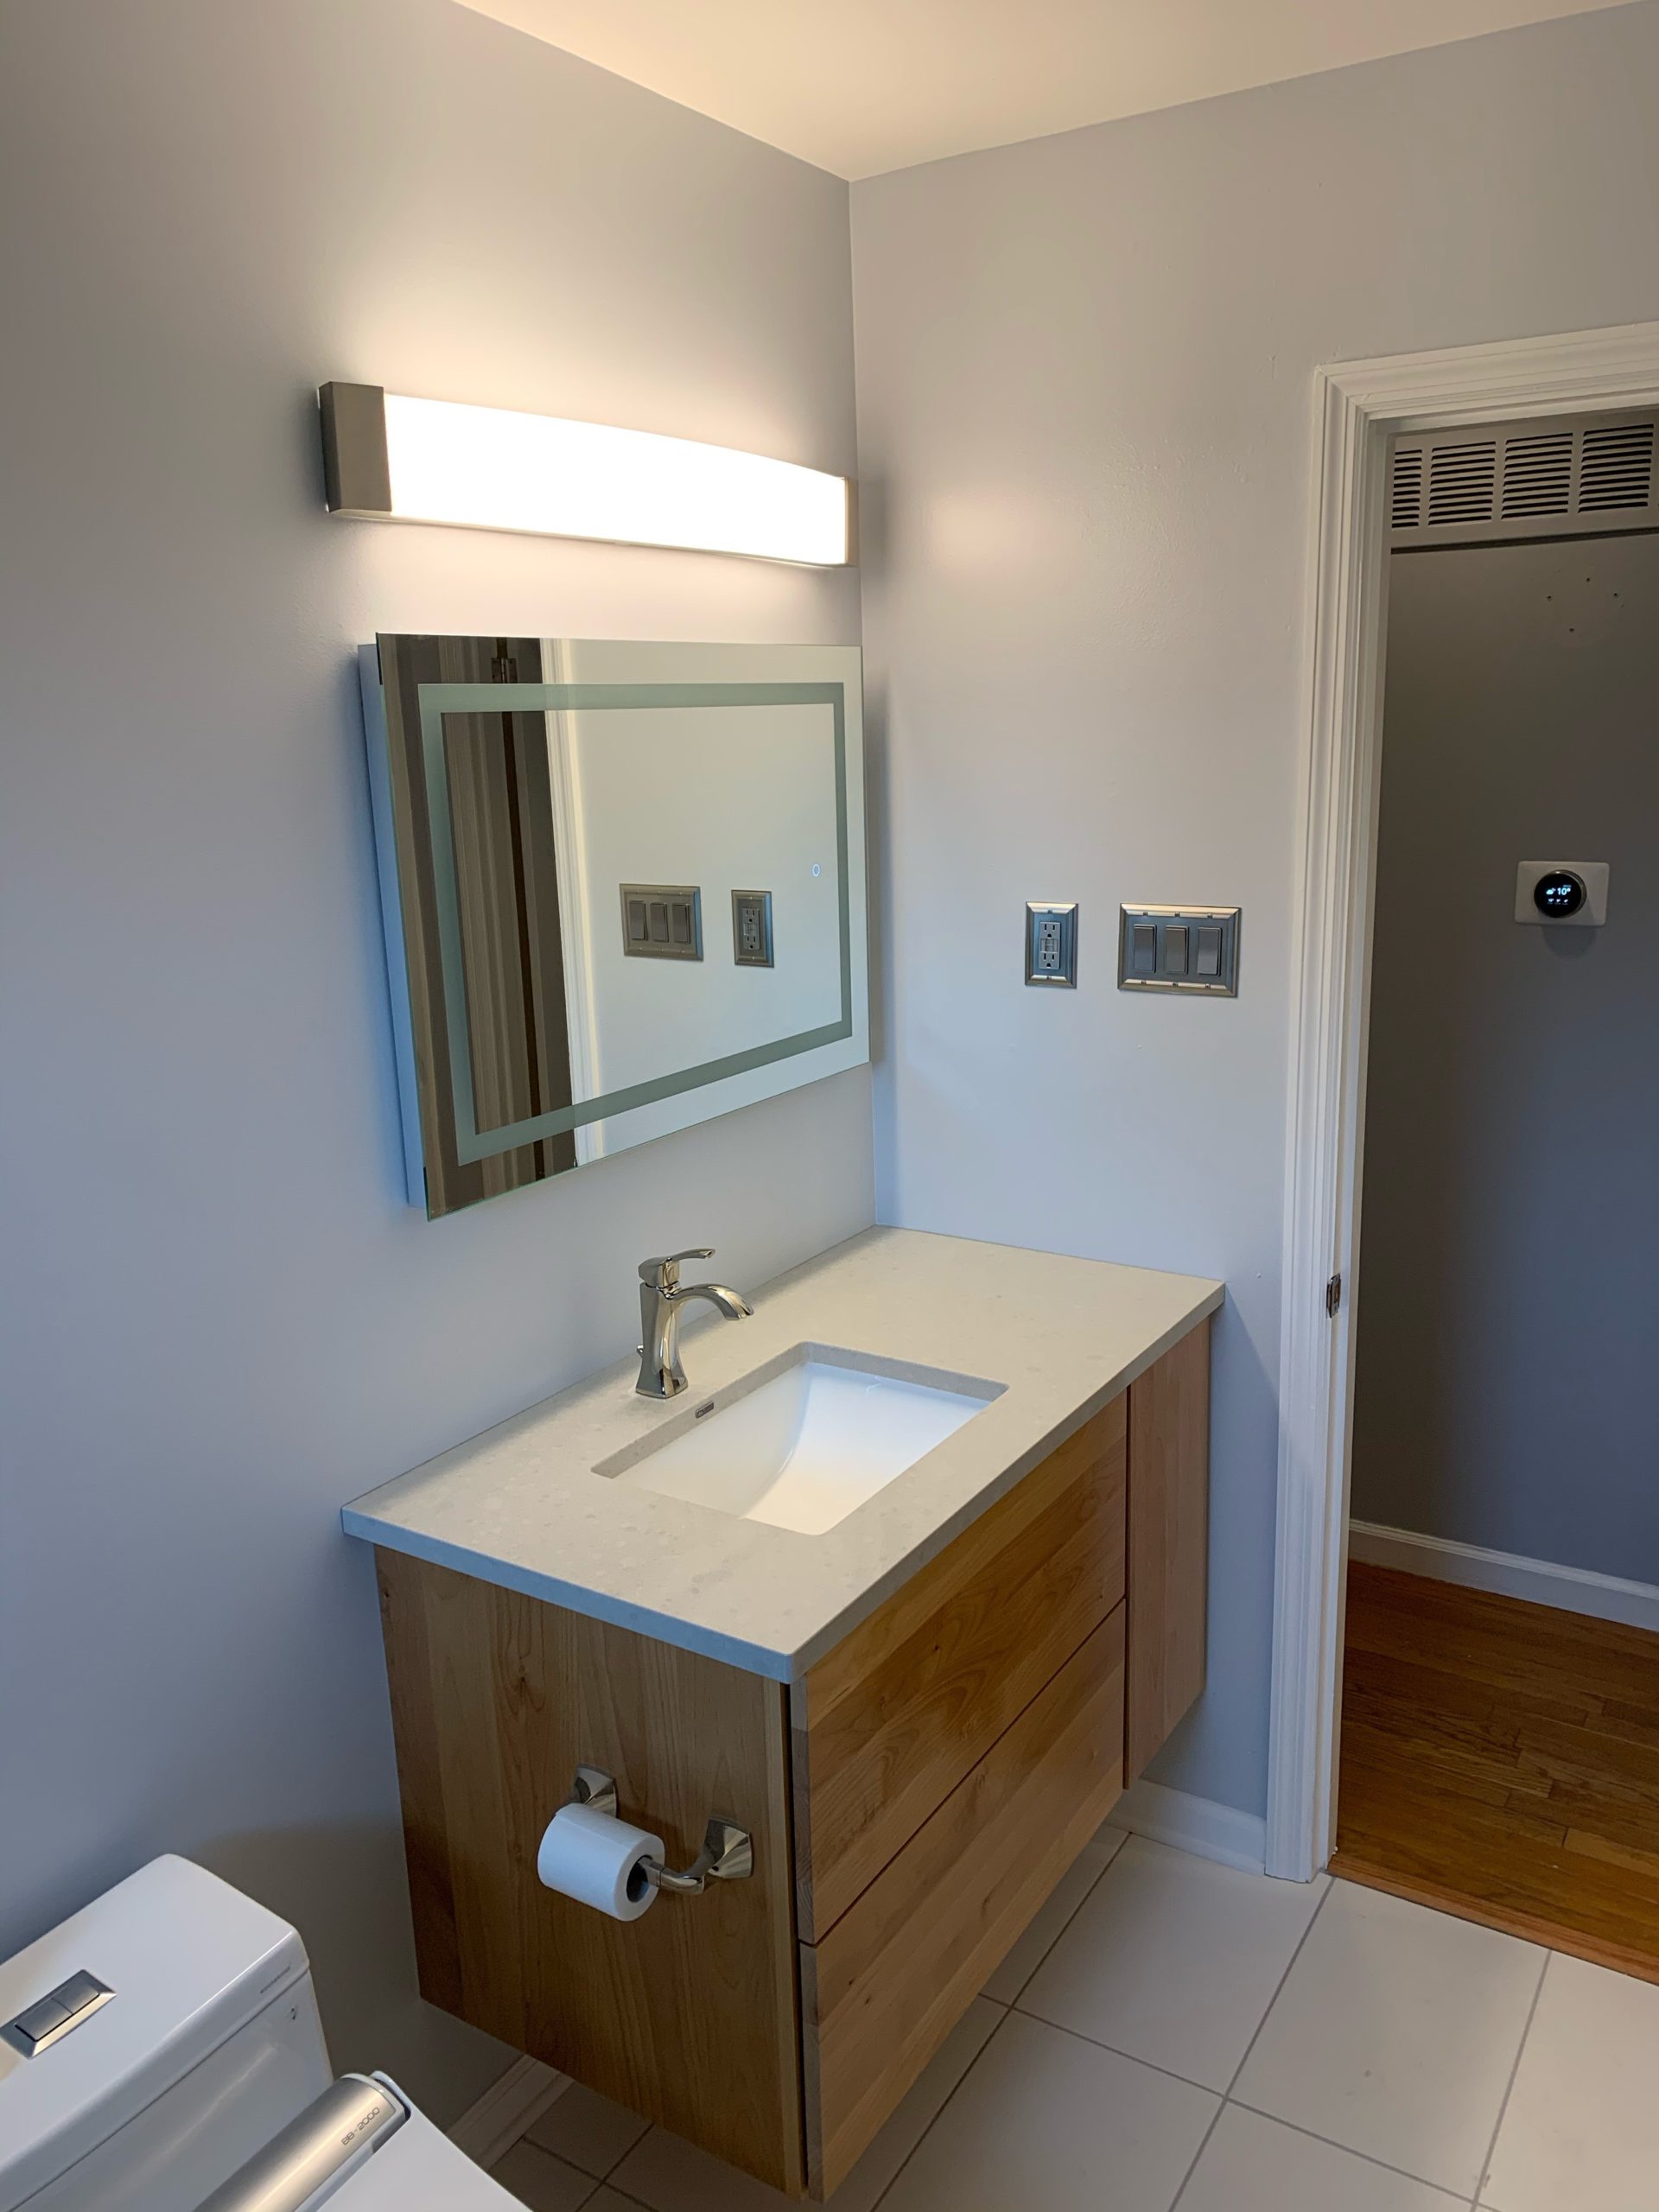 Lexington-area bathroom remodel with clean, modern sink fixtures